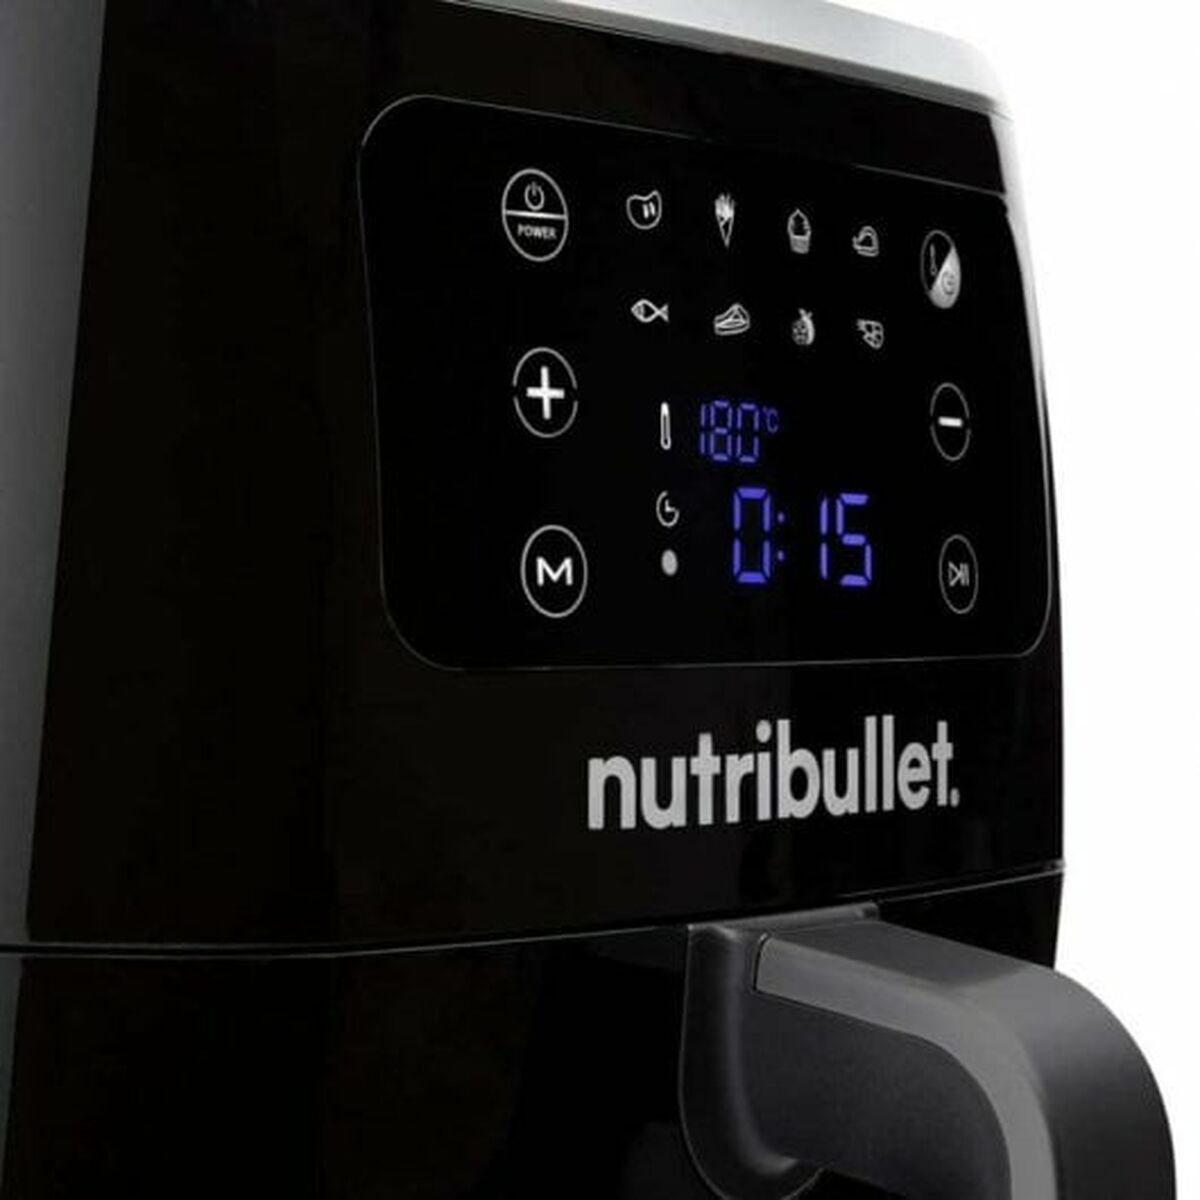 No-Oil Fryer Nutribullet Black 1800 W 7 L